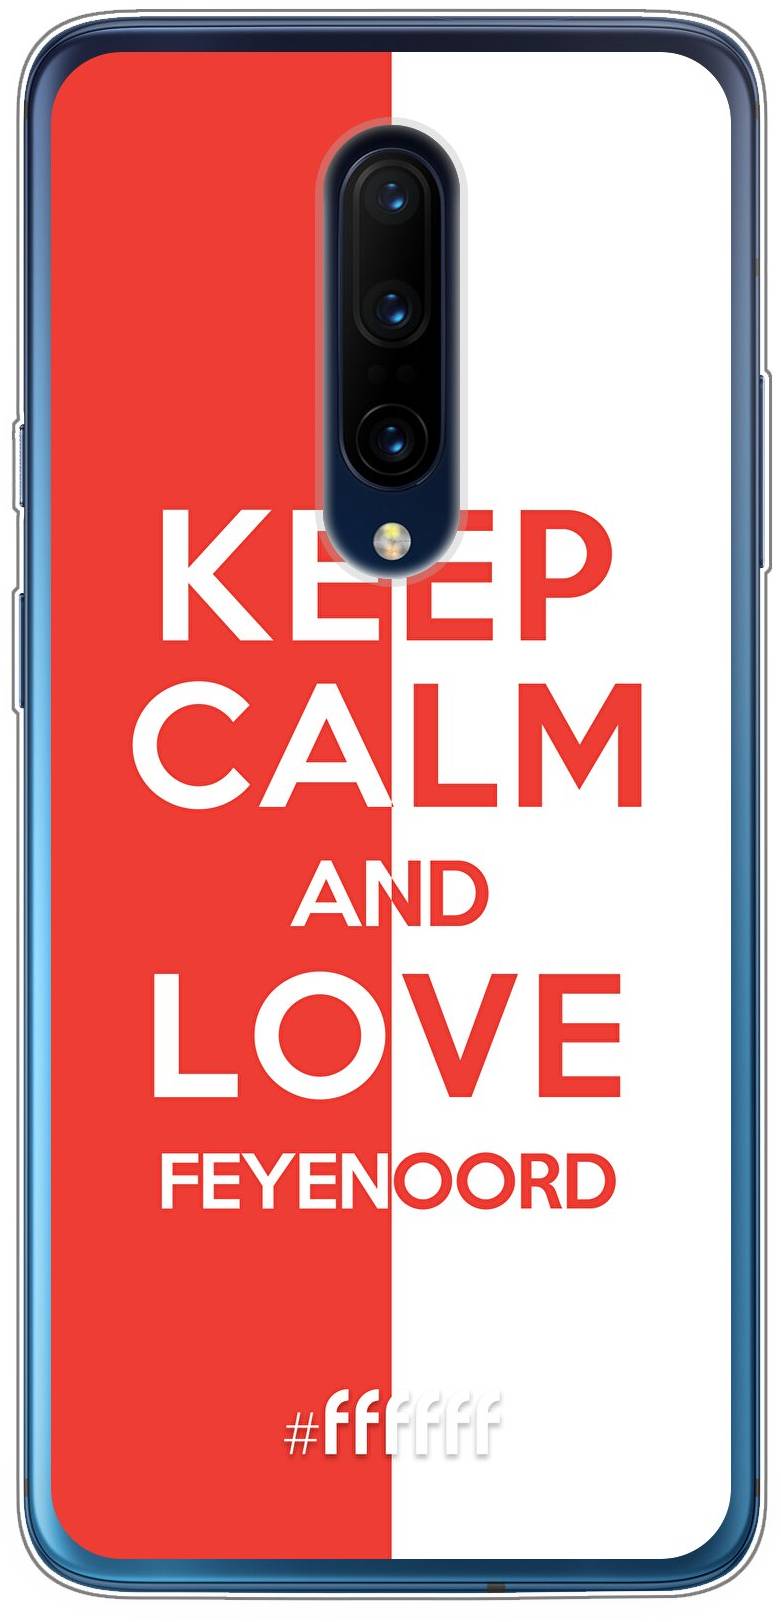 Feyenoord - Keep calm 7 Pro